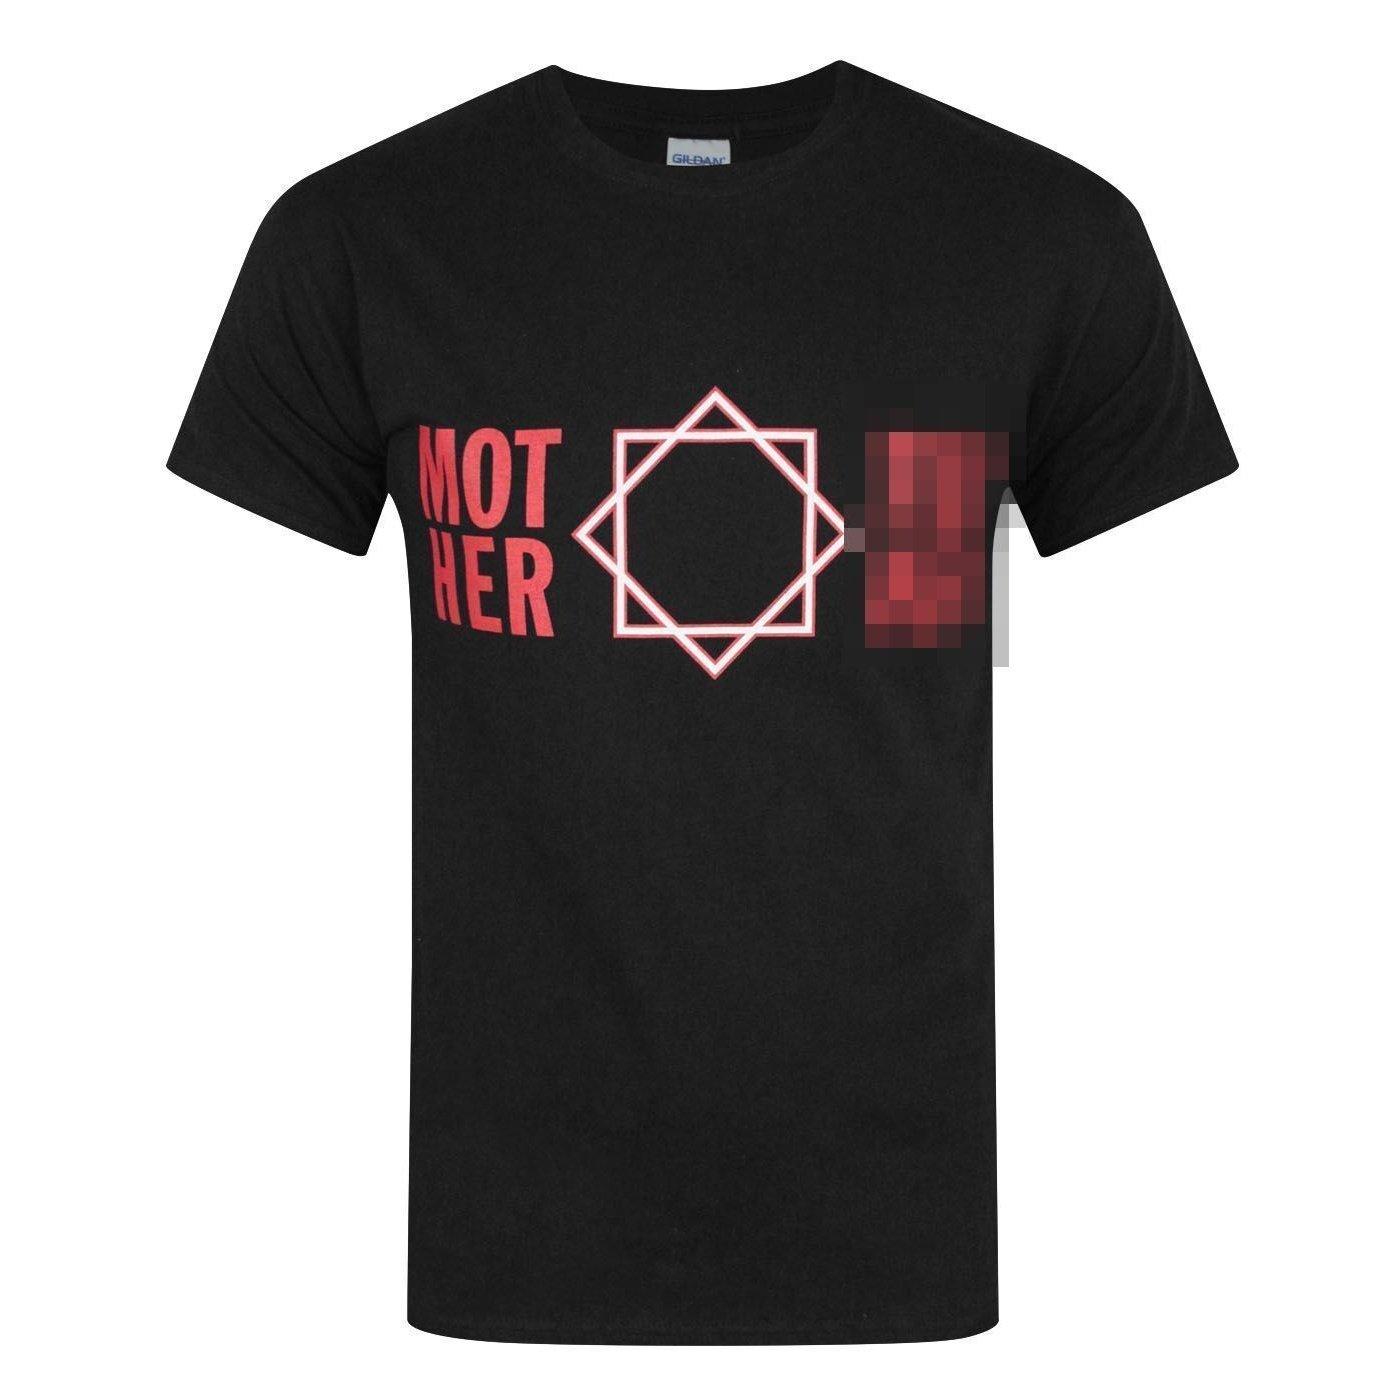 Faith No More  T-Shirt 